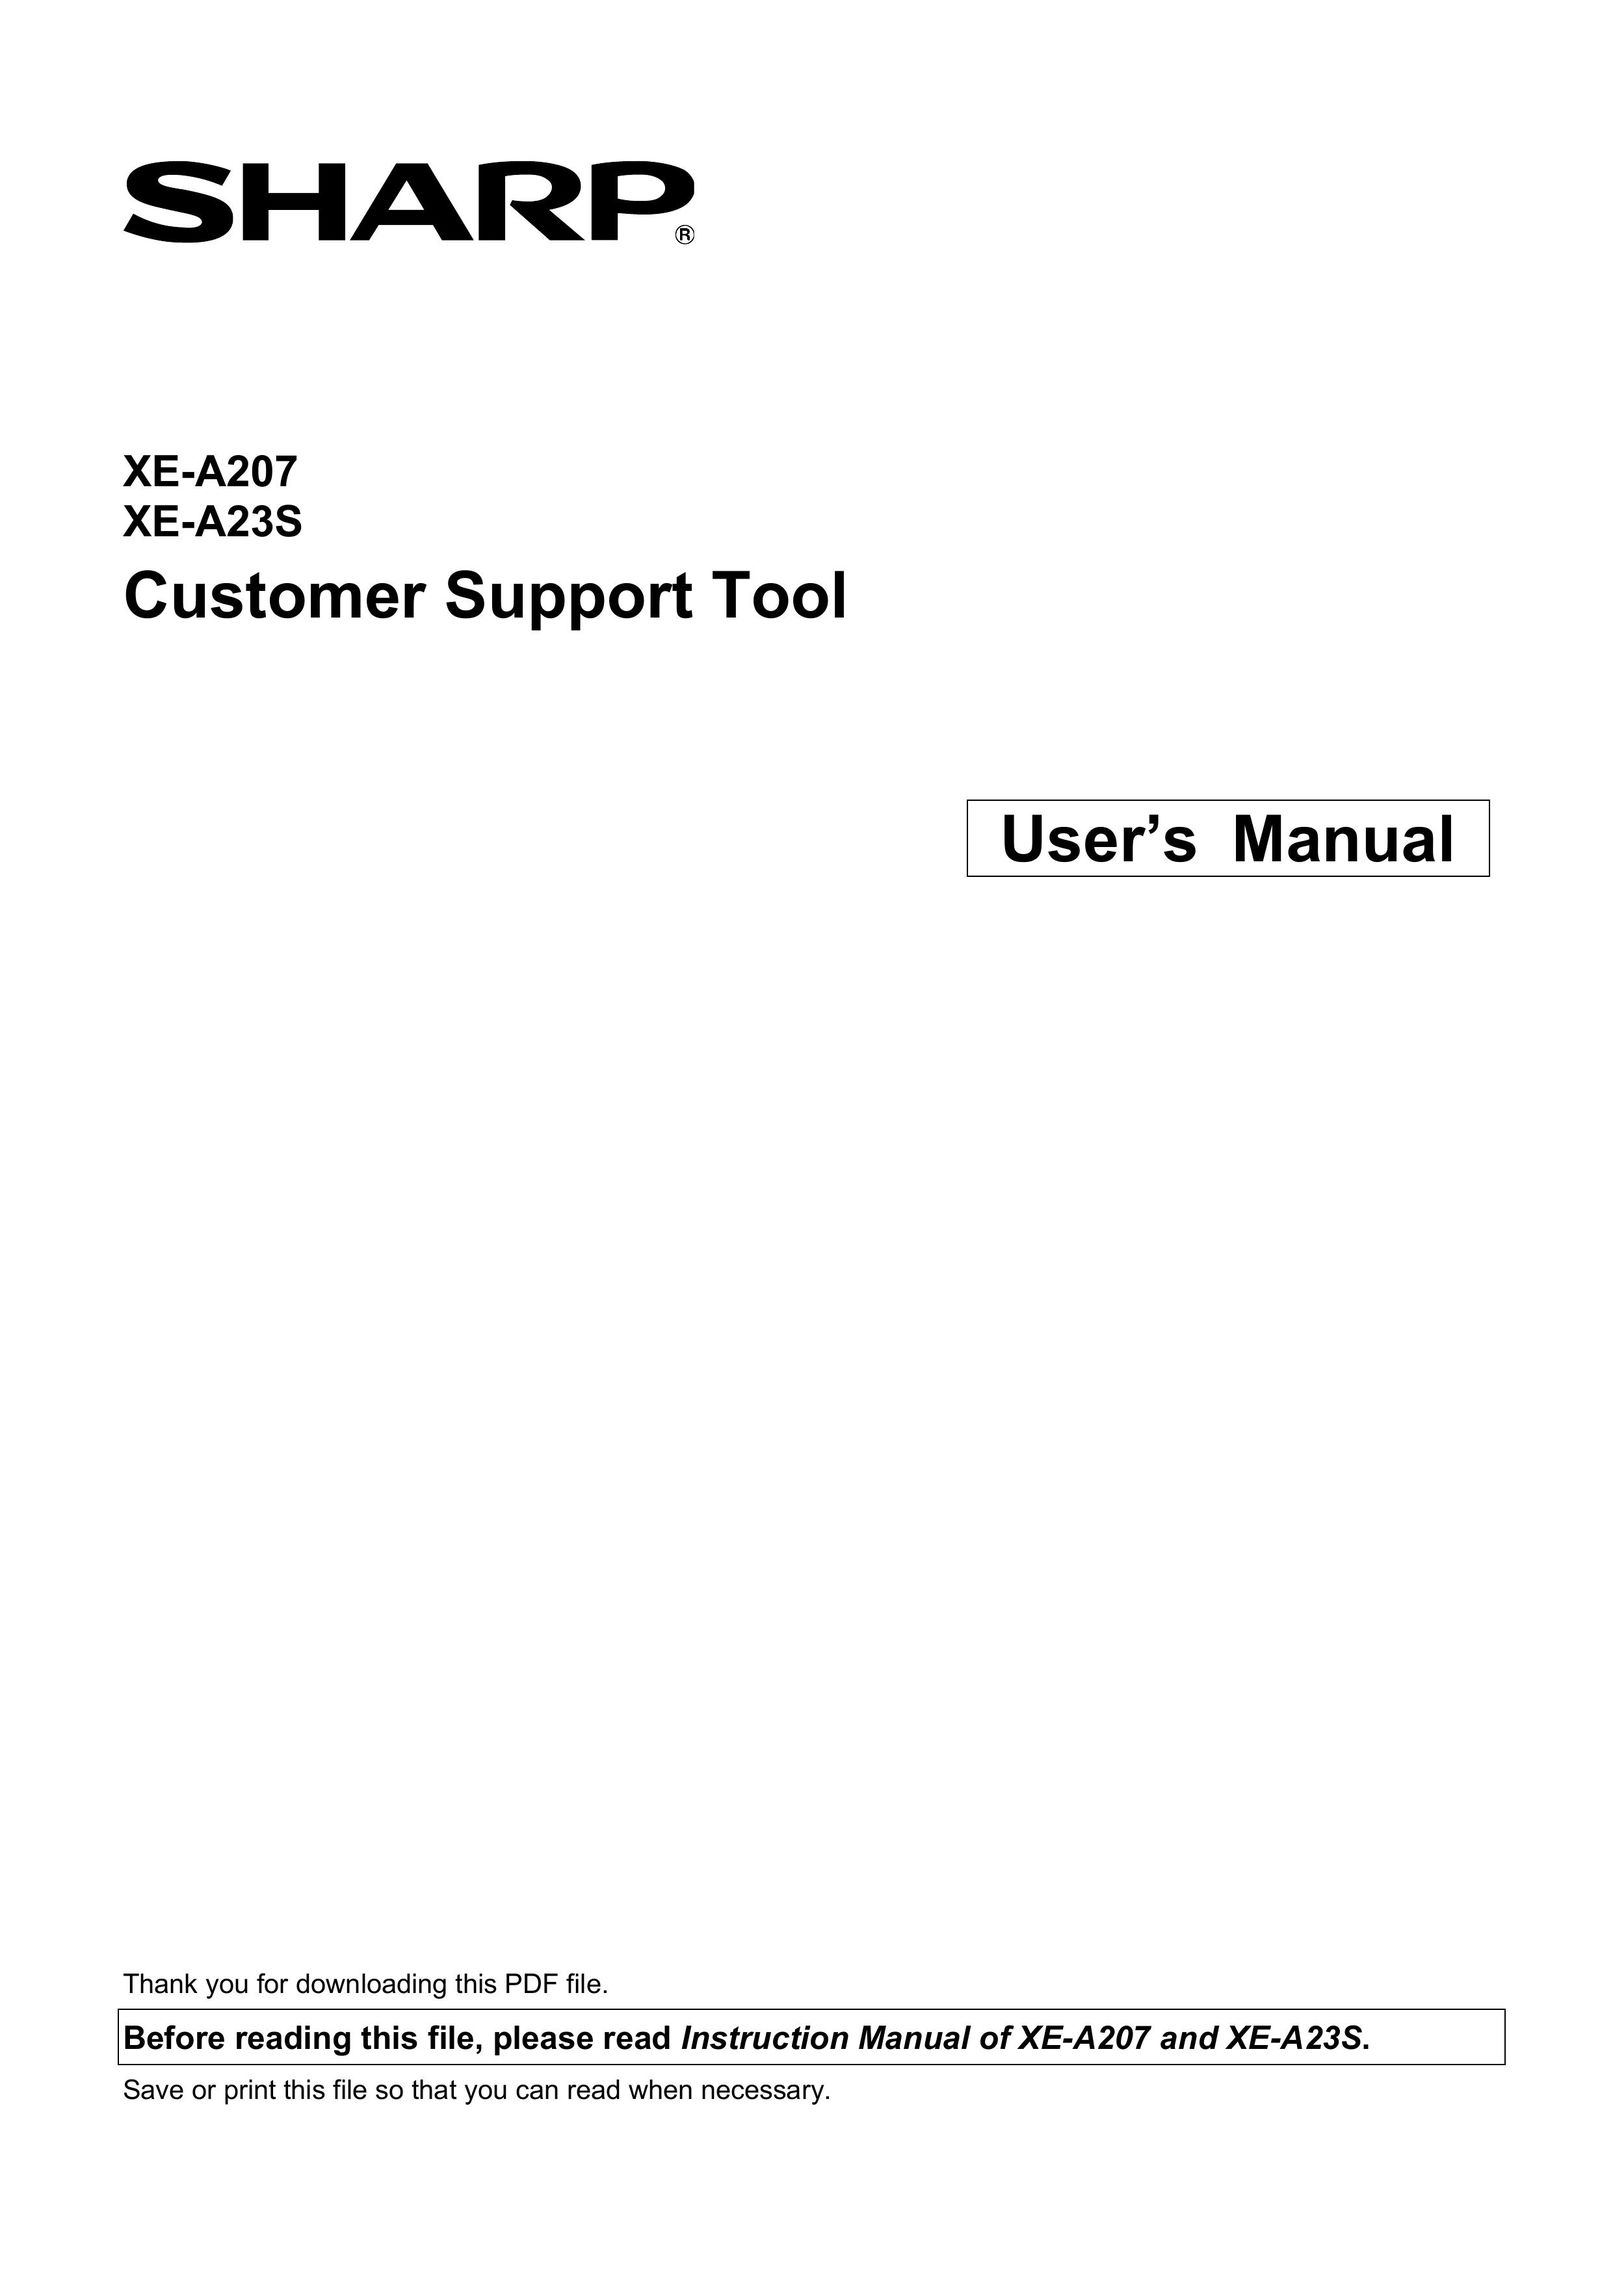 Sharp XE-A207 Computer Hardware User Manual